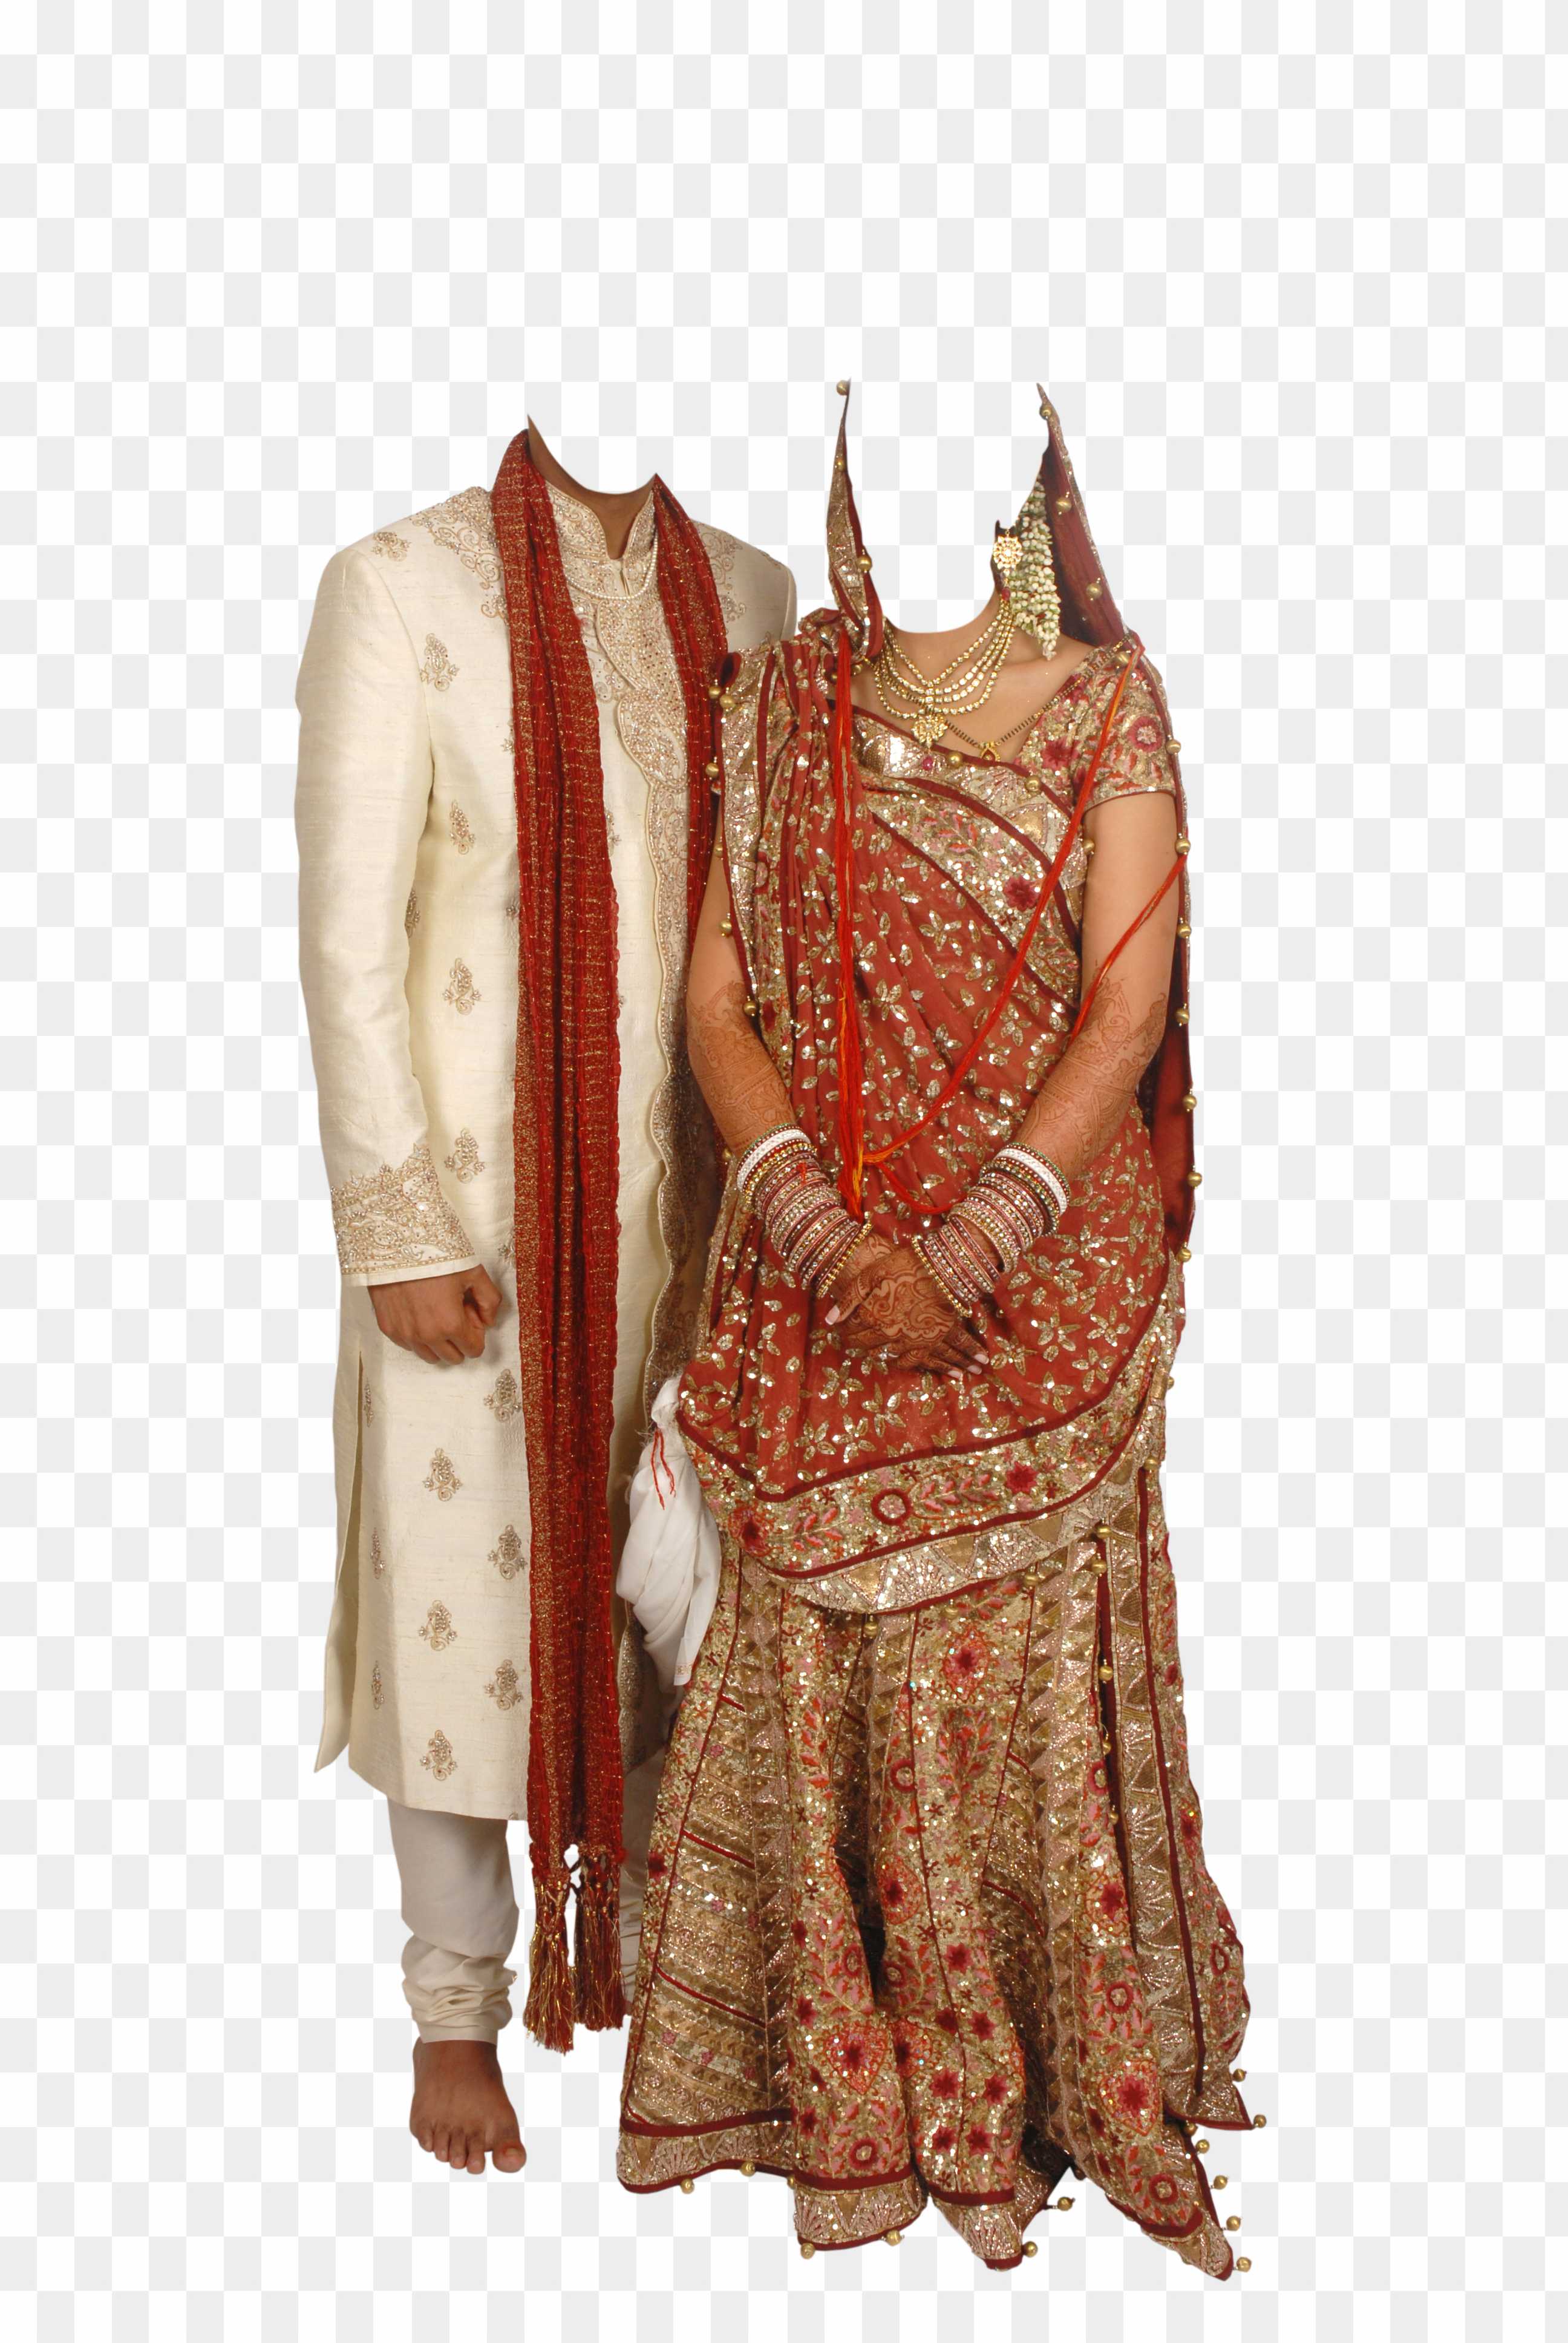 Shibani Dandekar Wedding Dresses: All the outfits Shibani Dandekar Akhtar  wore for her wedding | Times of India